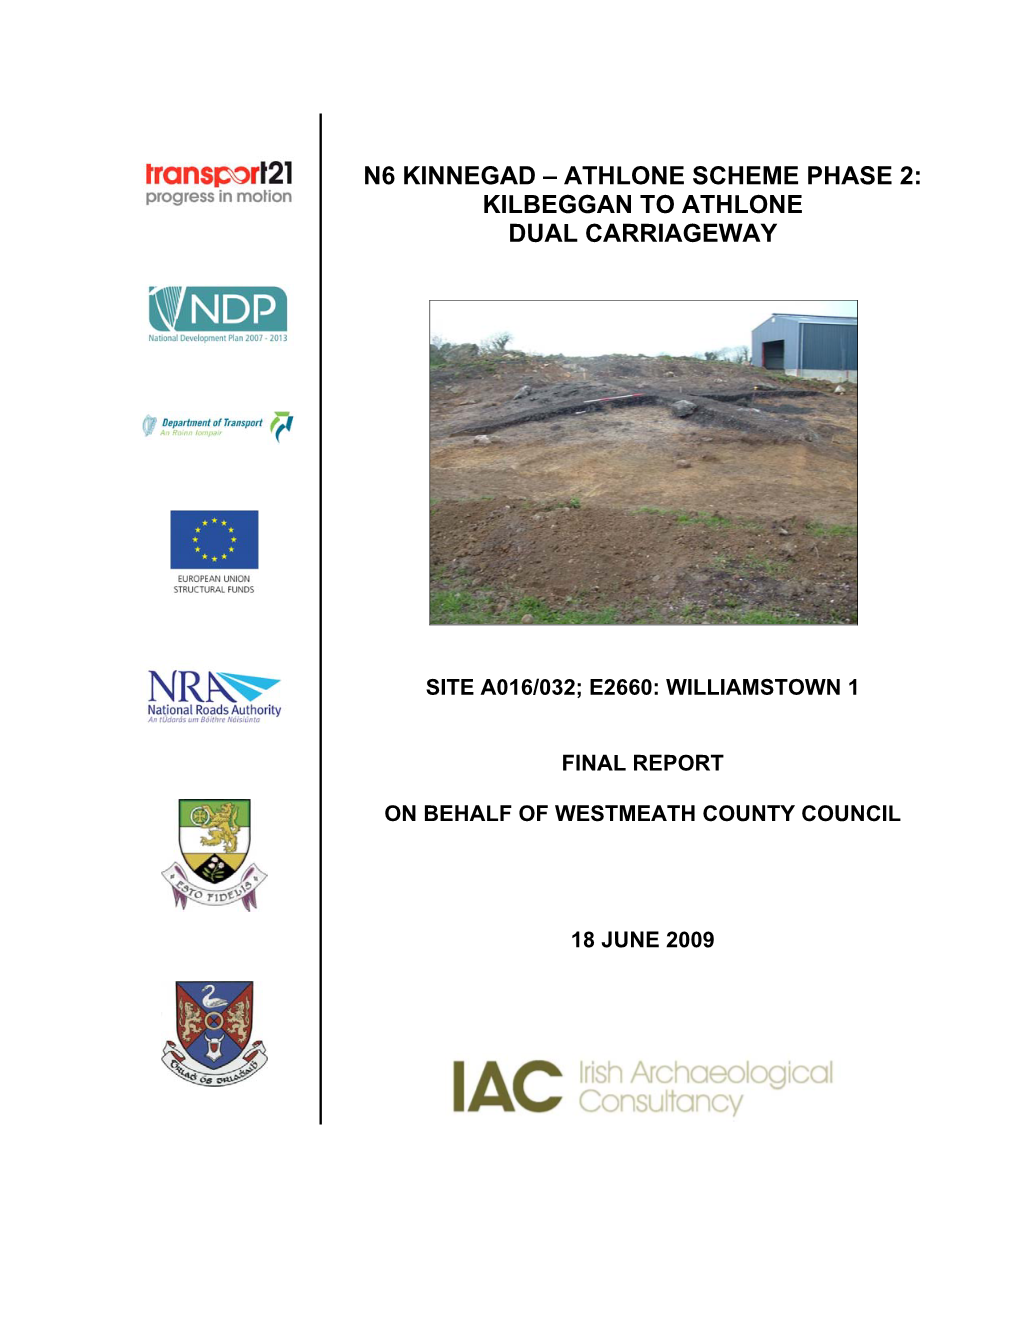 Athlone Scheme Phase 2: Kilbeggan to Athlone Dual Carriageway: Archaeological Assessment